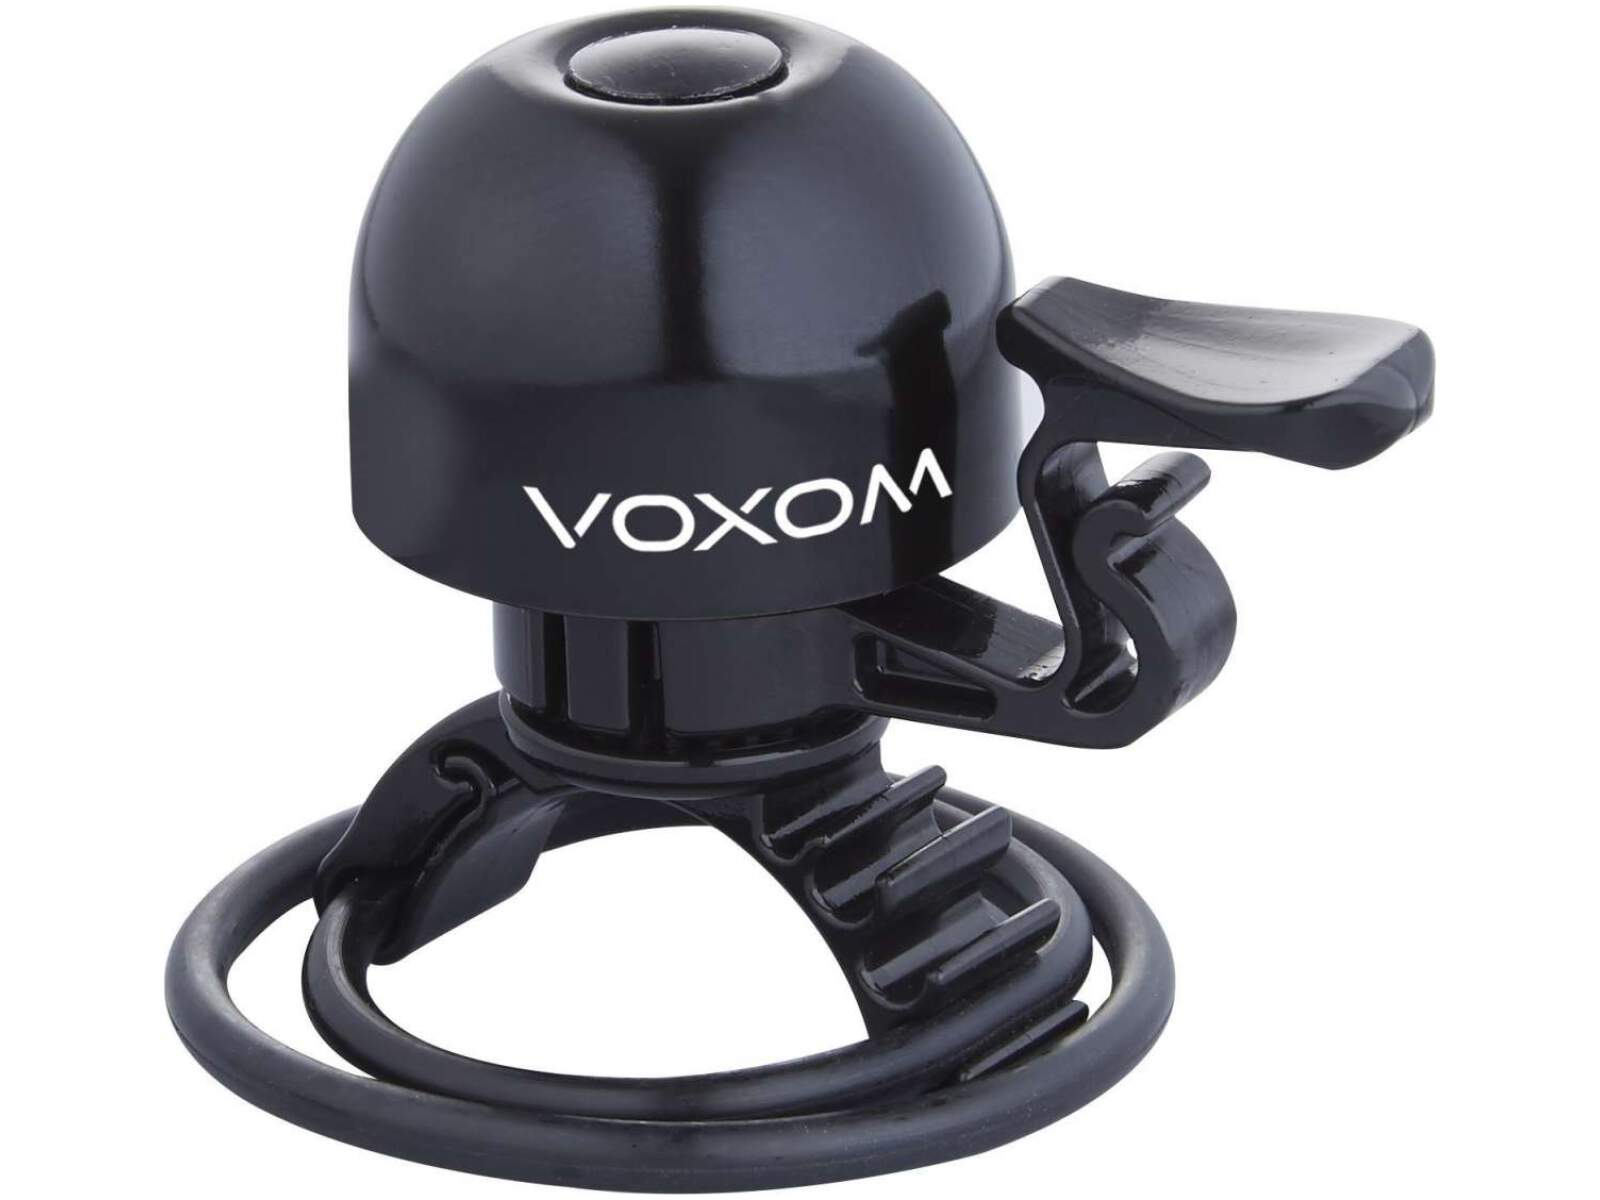 Dzwonek do roweru Voxom KL15